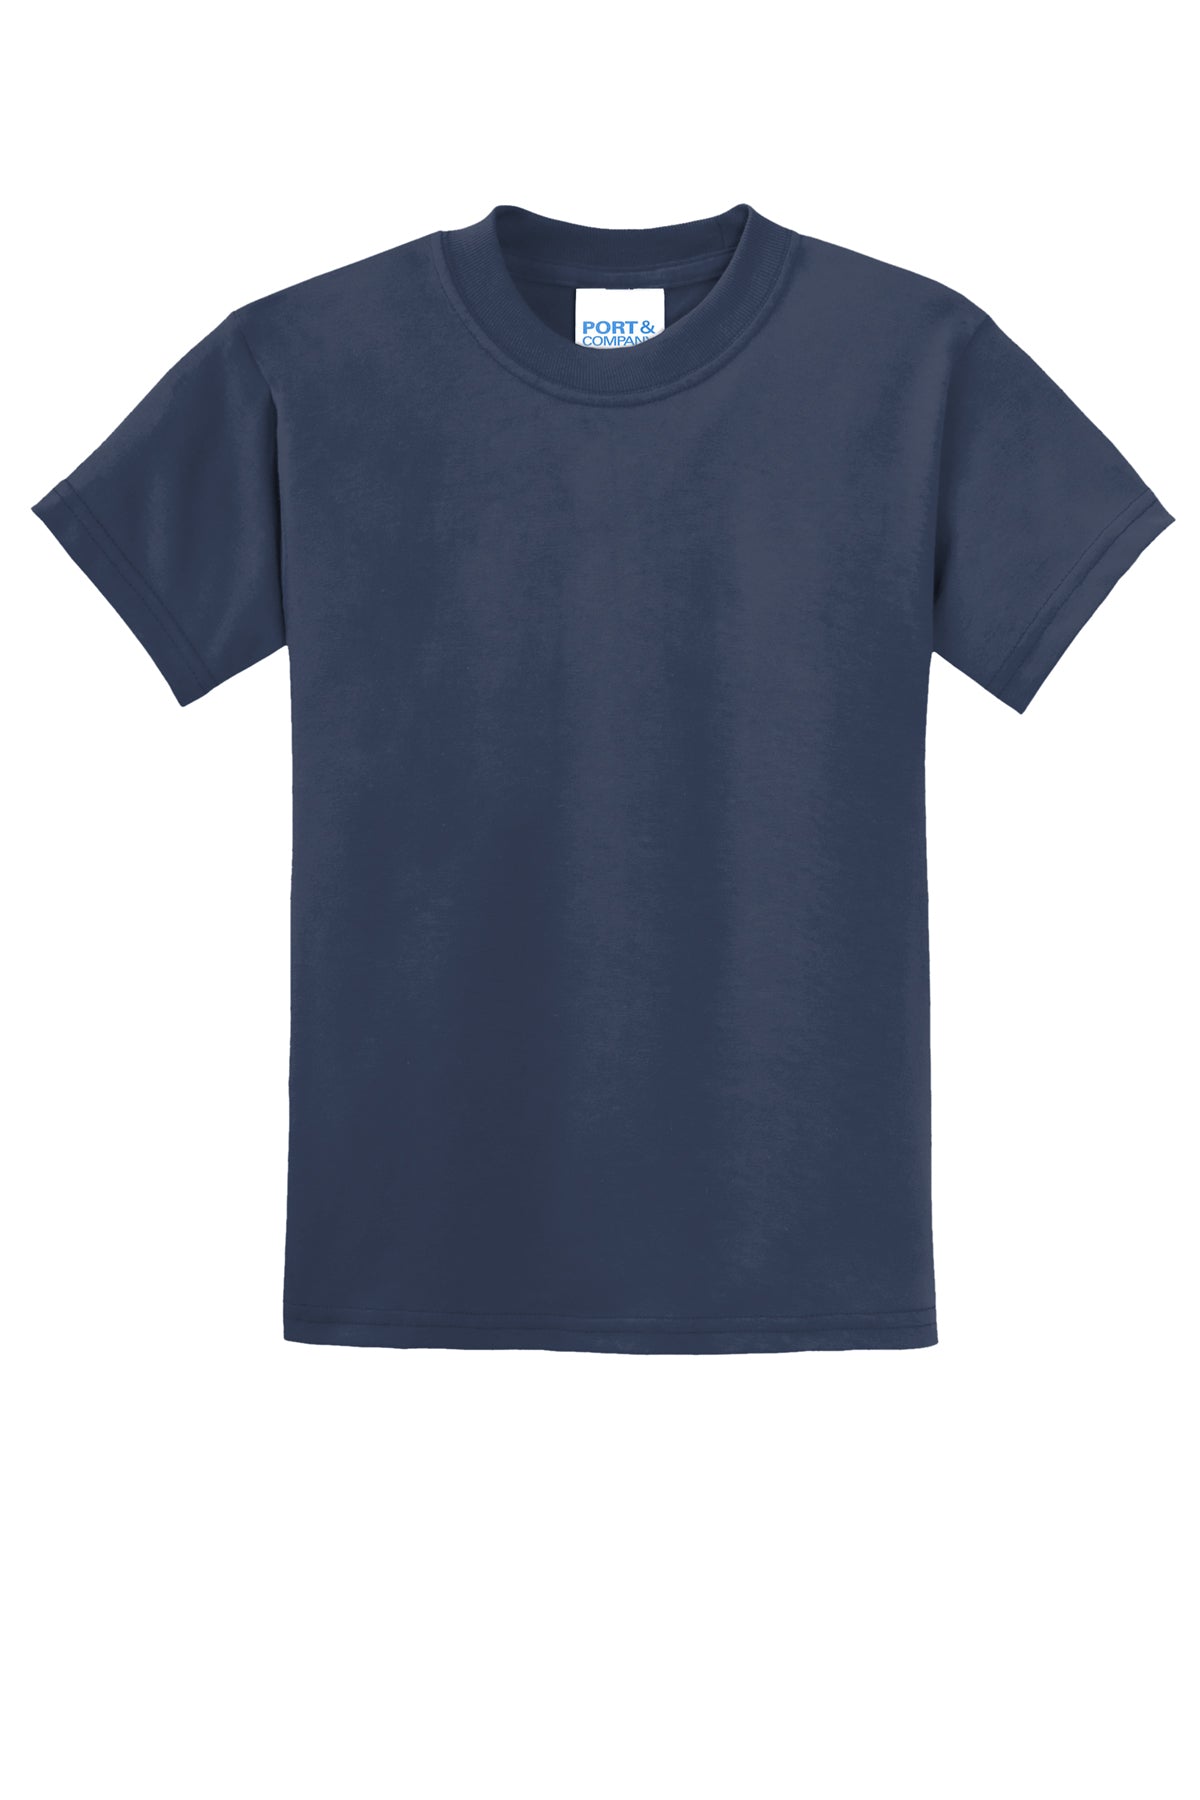 Signal Mtn Christian T-Shirt Short Sleeve